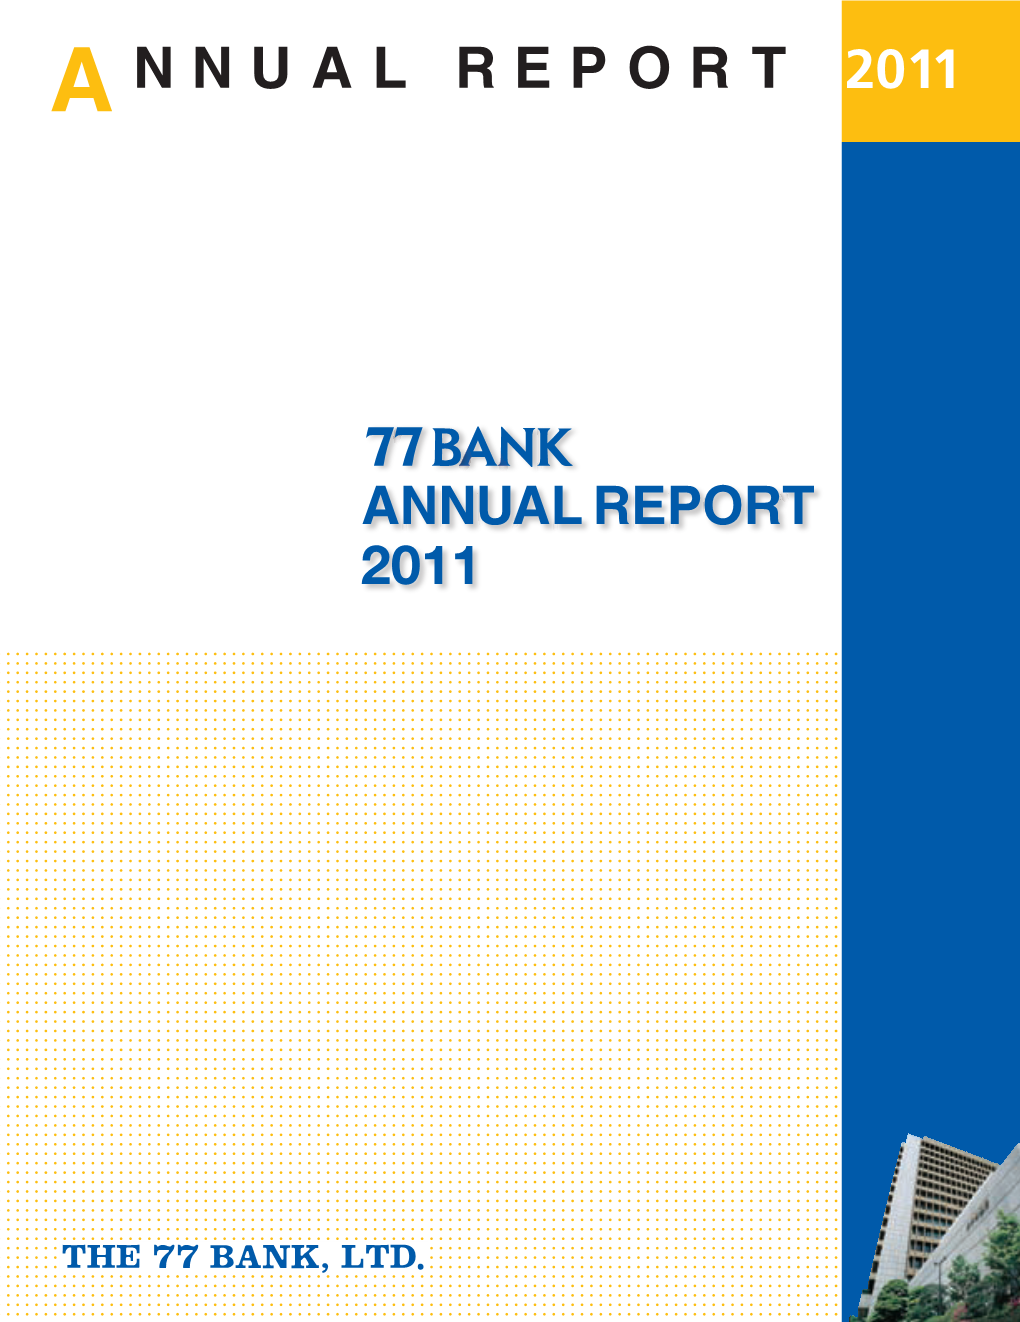 THE 77 BANK, LTD. Annual Report 2011